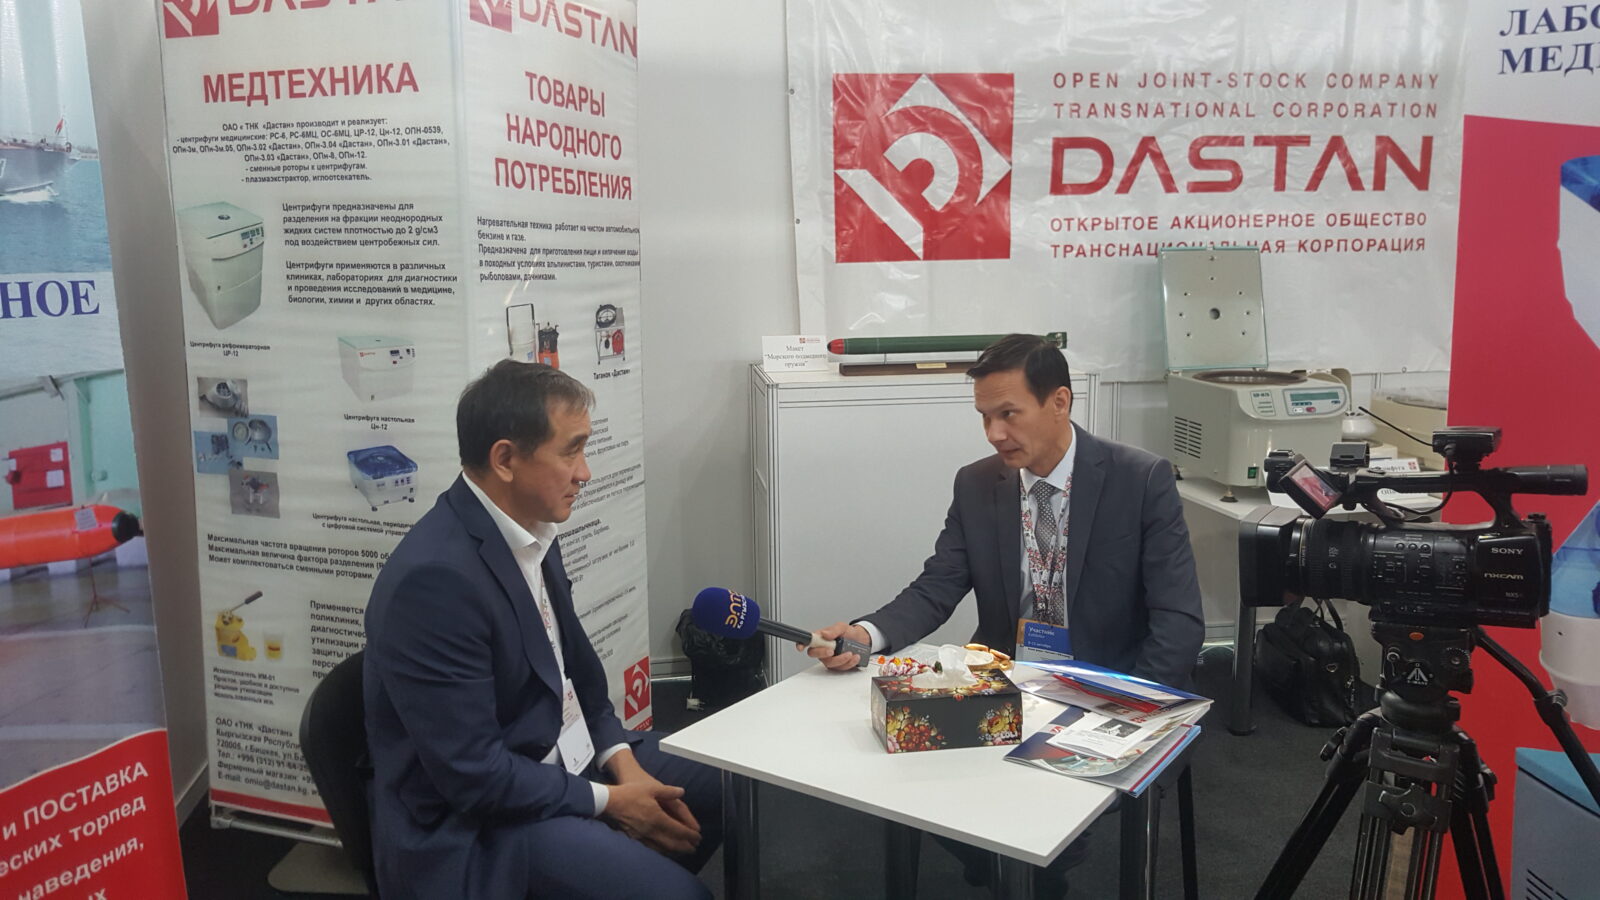 20191009 115843 e1570619162730 - Индийско—кыргызская выставка «Namaskar Eurasia Trade Expo»